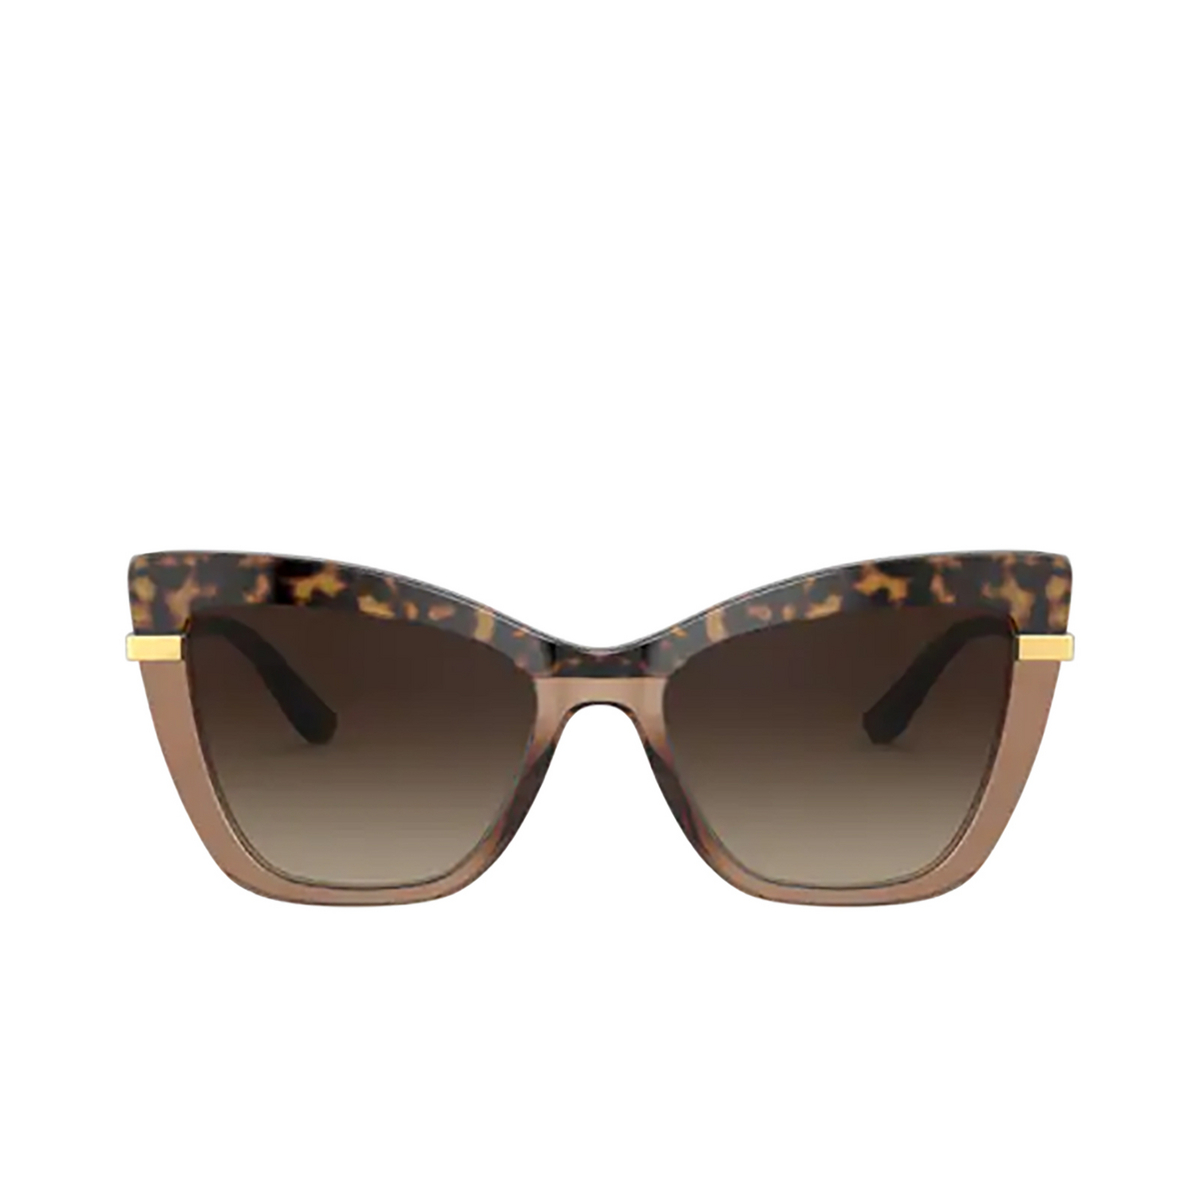 Dolce & Gabbana DG4374 Sunglasses 325613 HAVANA ON TRANSPARENT BROWN - front view